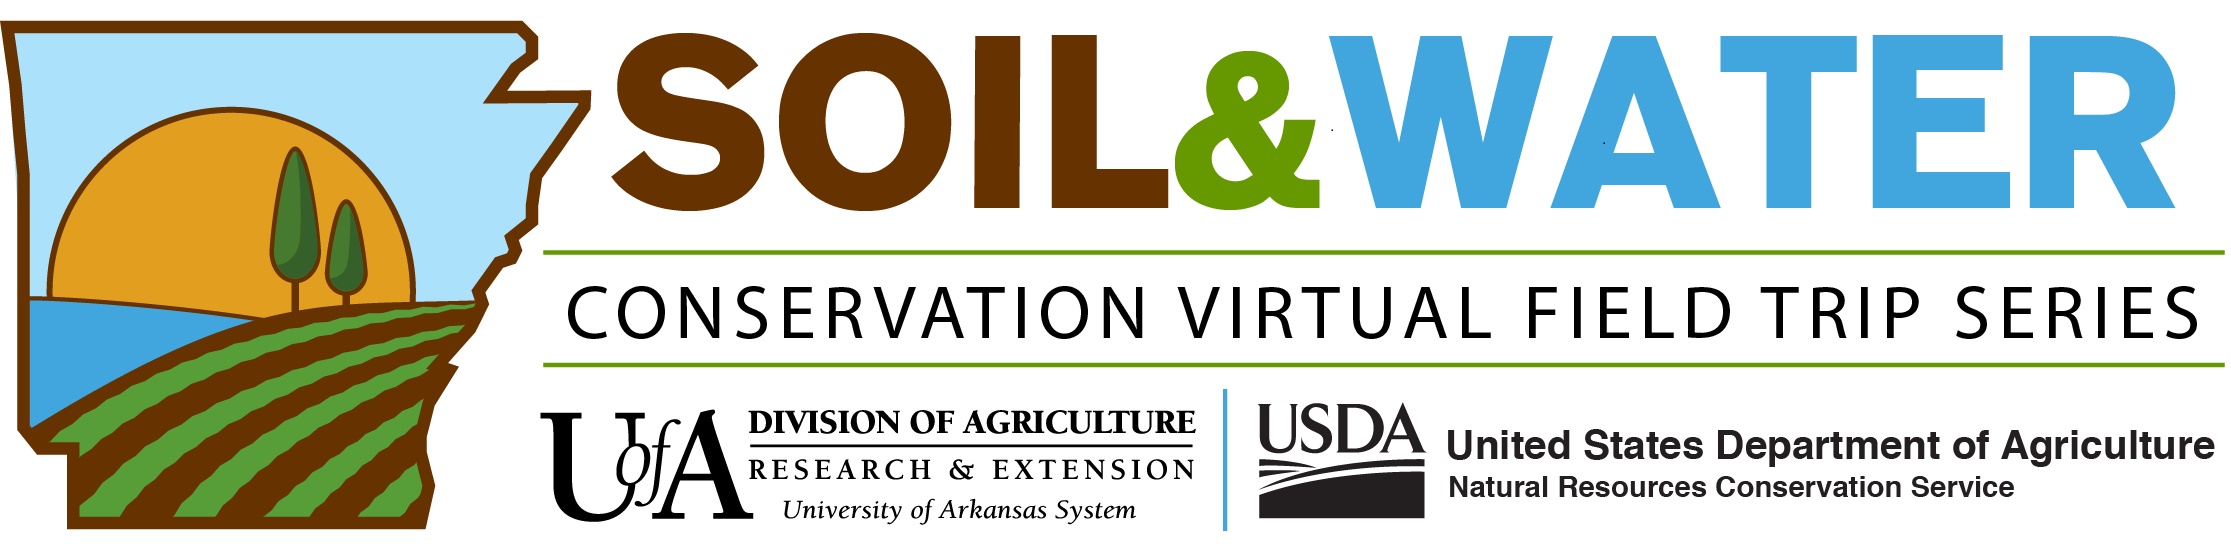 Soil & Water Conservation Virtual Field Trip Branding Image